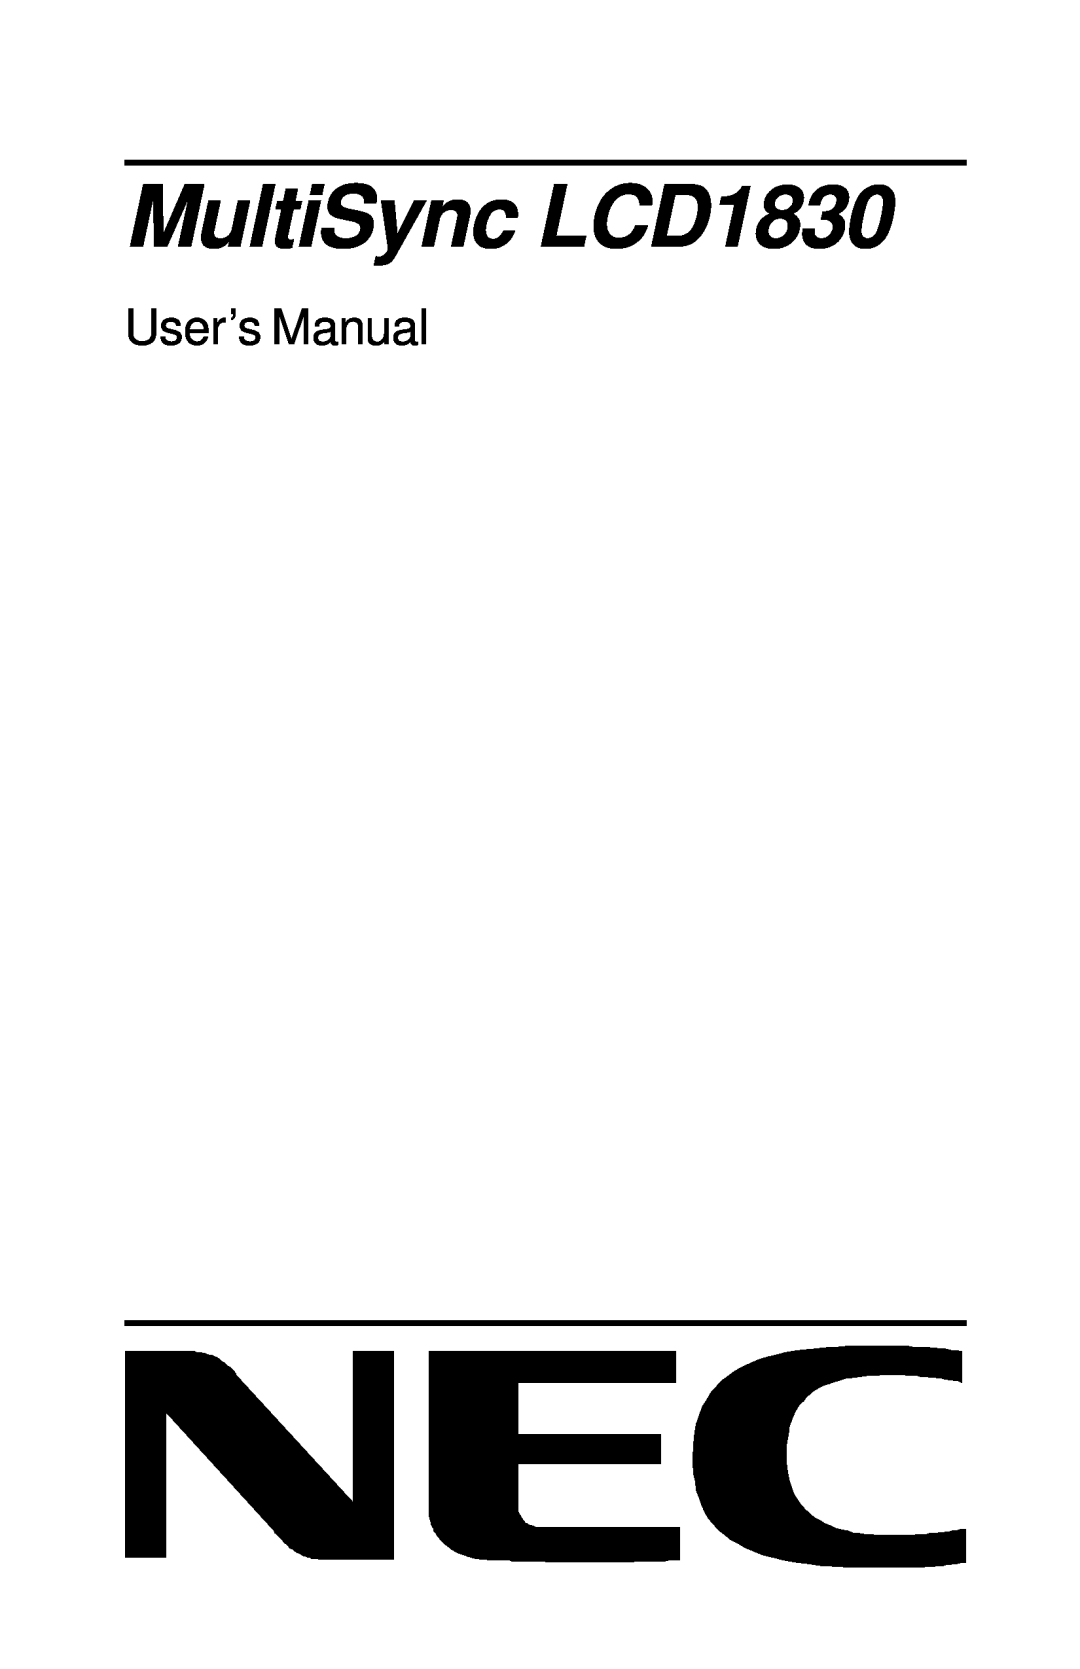 NEC user manual MultiSync LCD1830, User’s Manual 